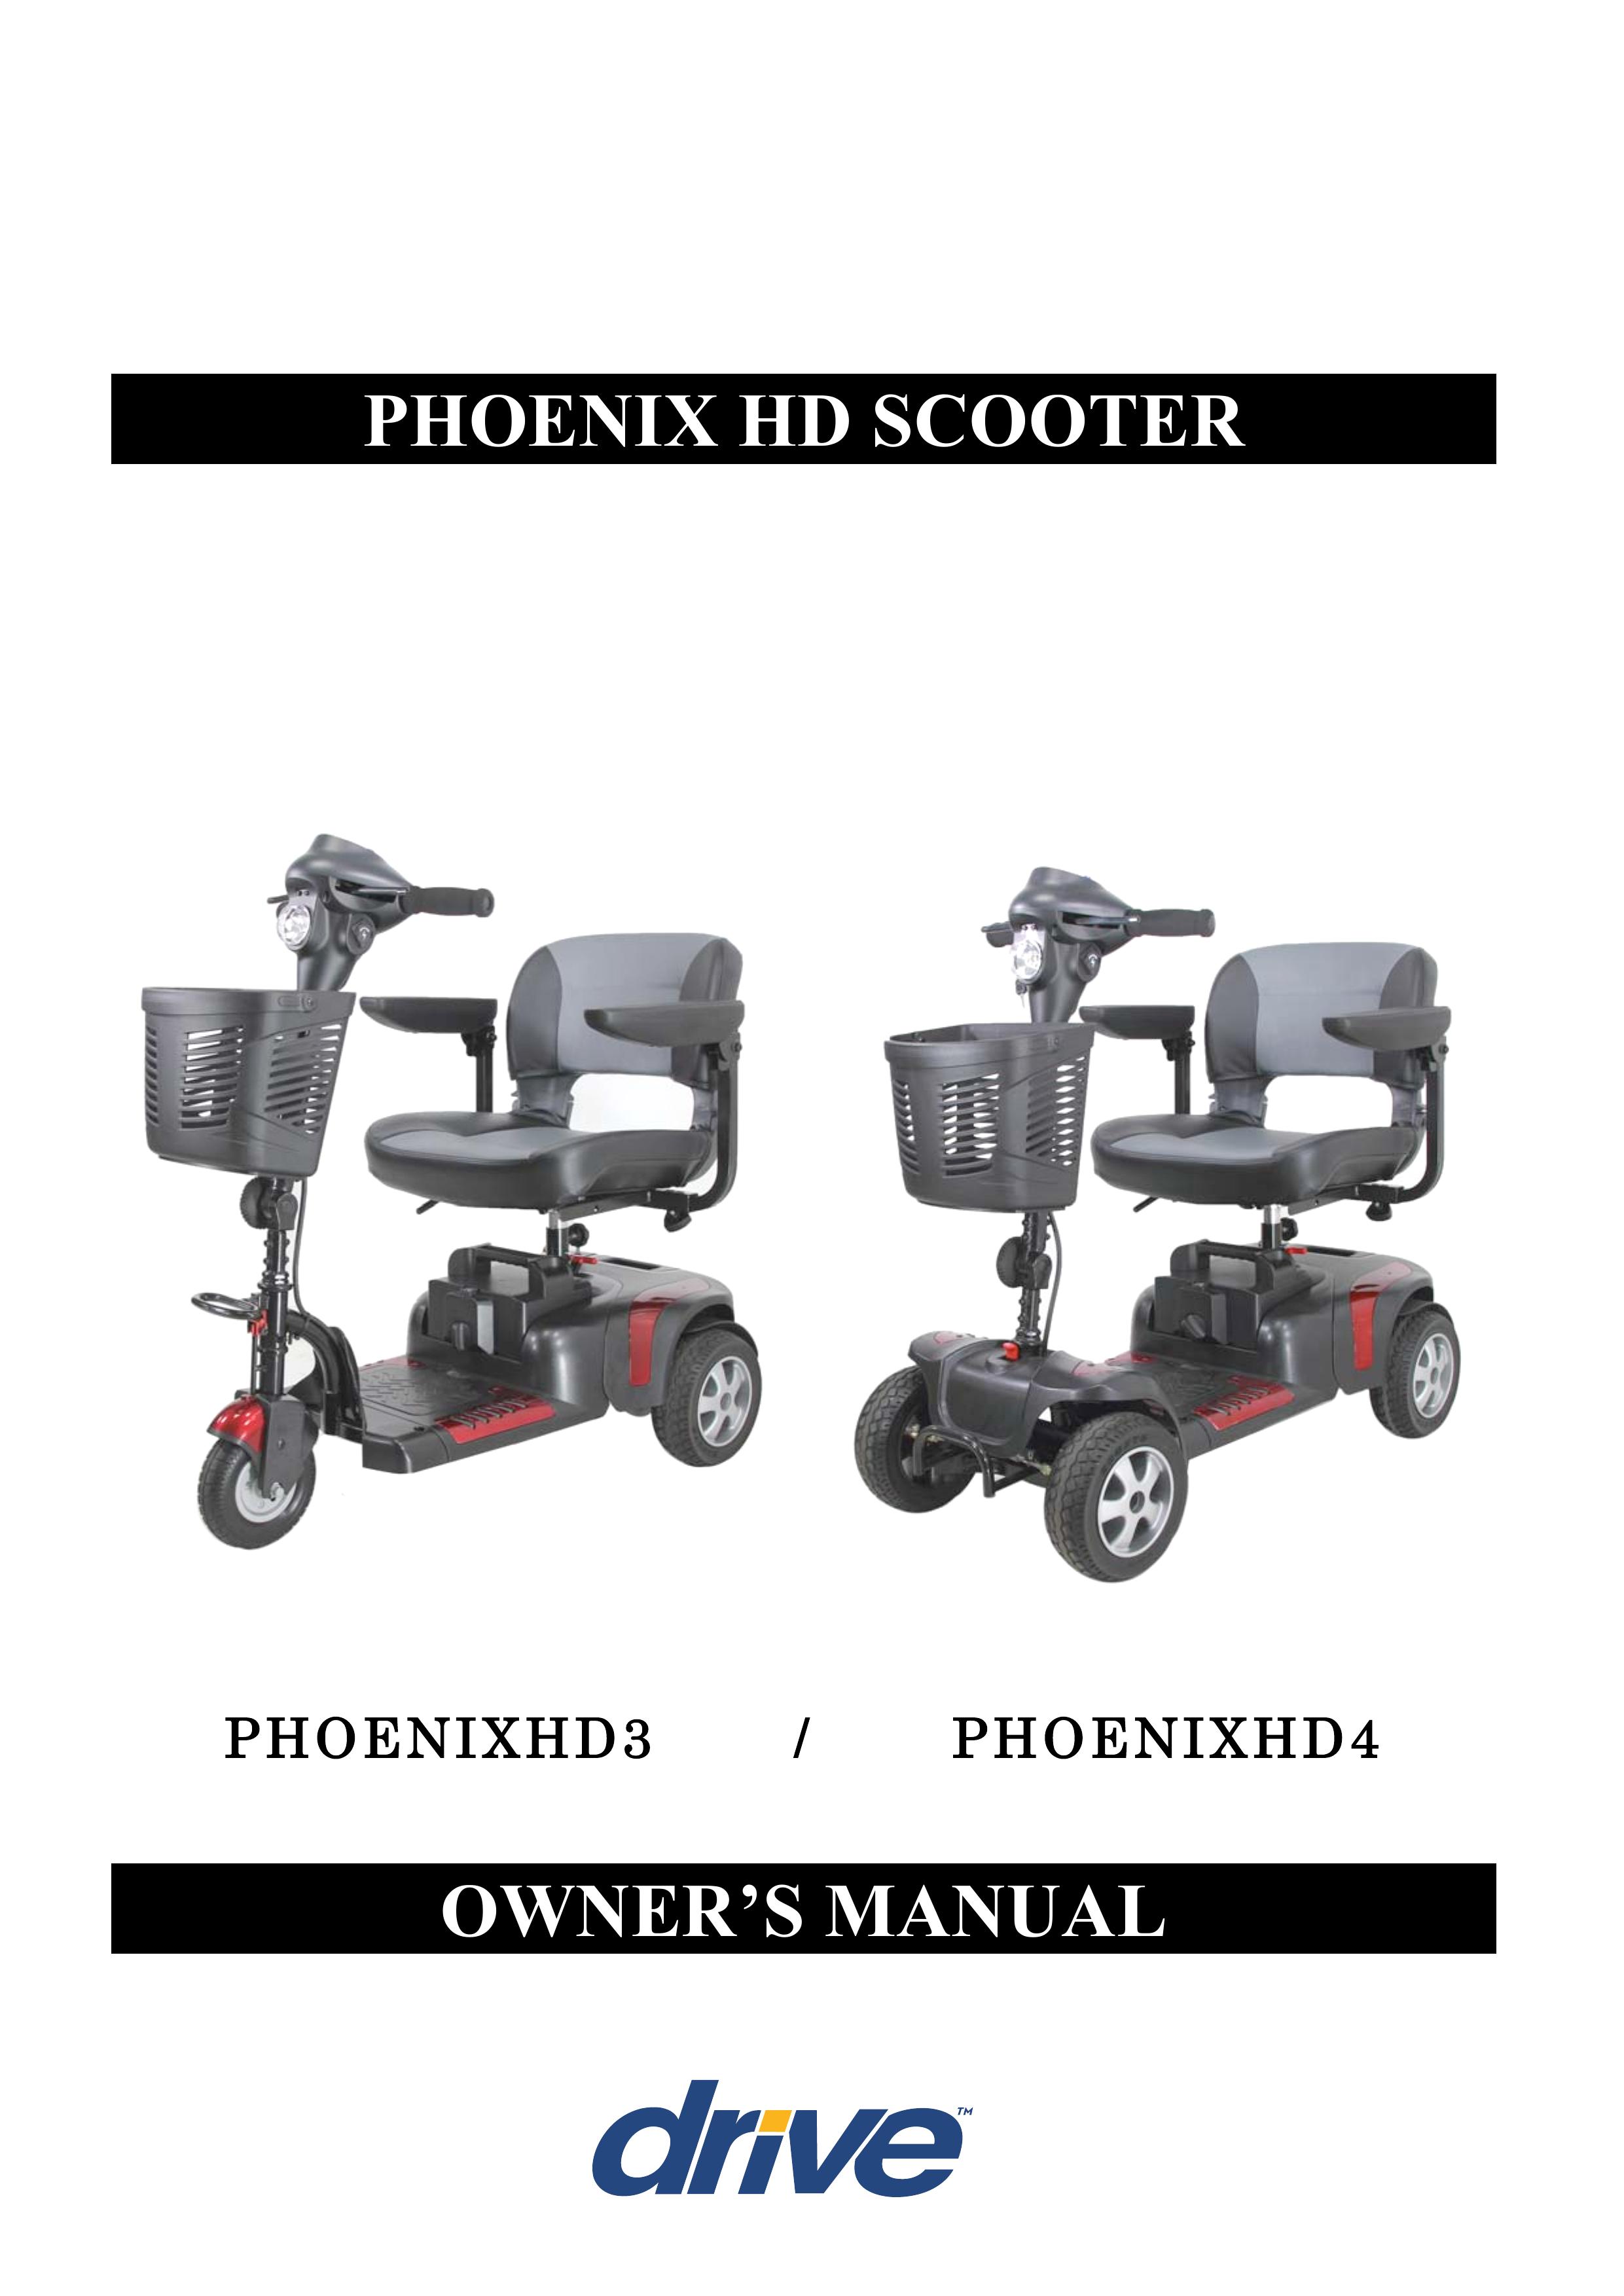 Drive Medical Design PhoenixHD3 Mobility Aid User Manual